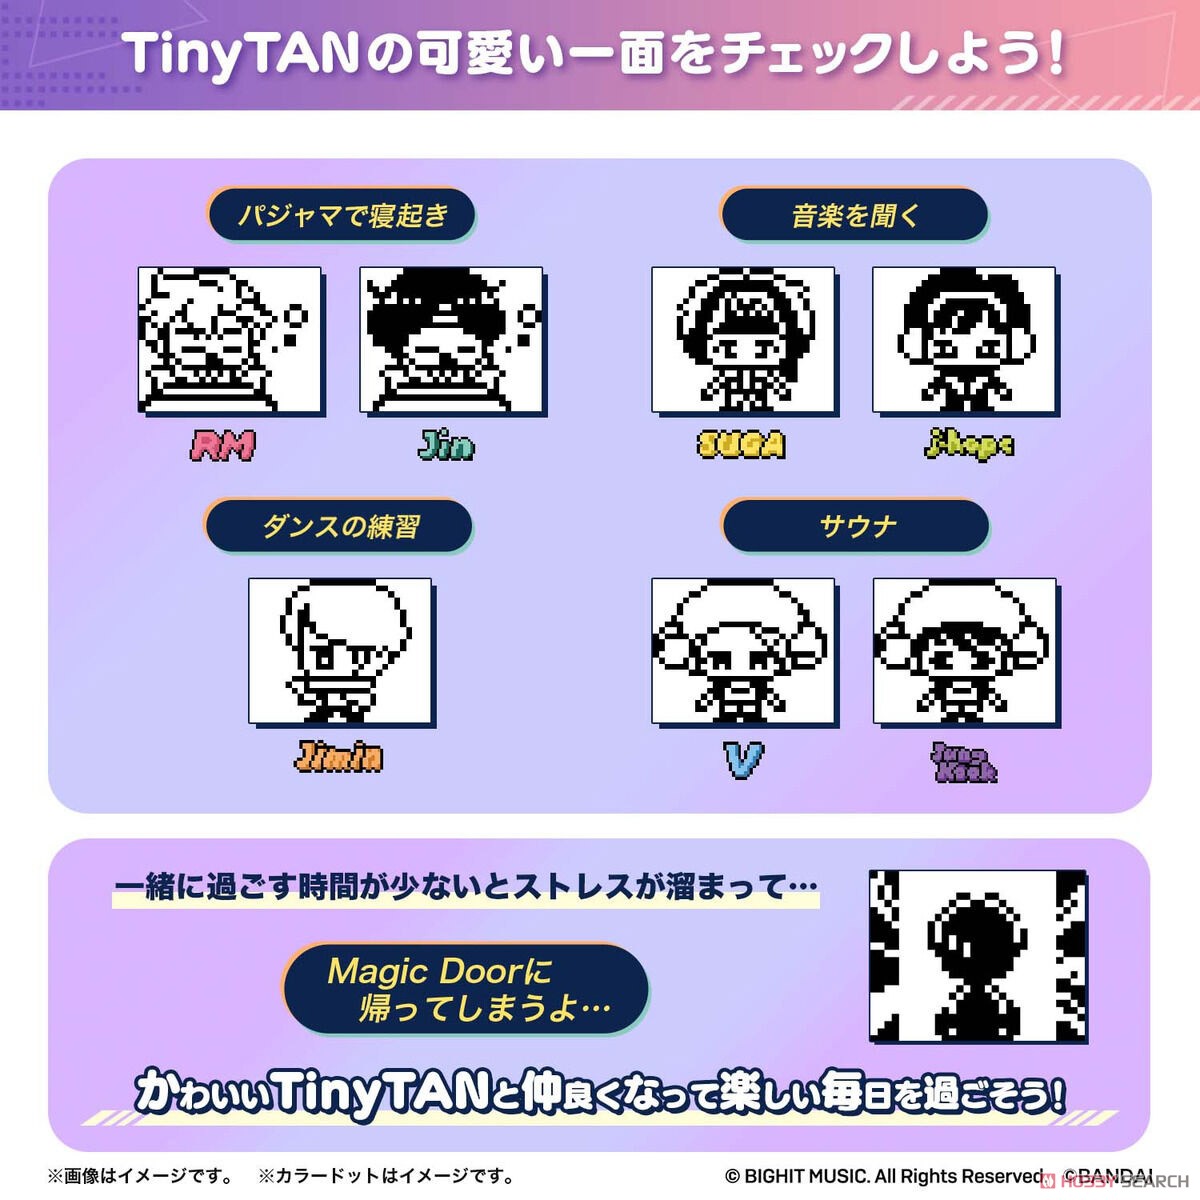 TinyTAN Tamagotchi Purple ver. (電子玩具) その他の画像5